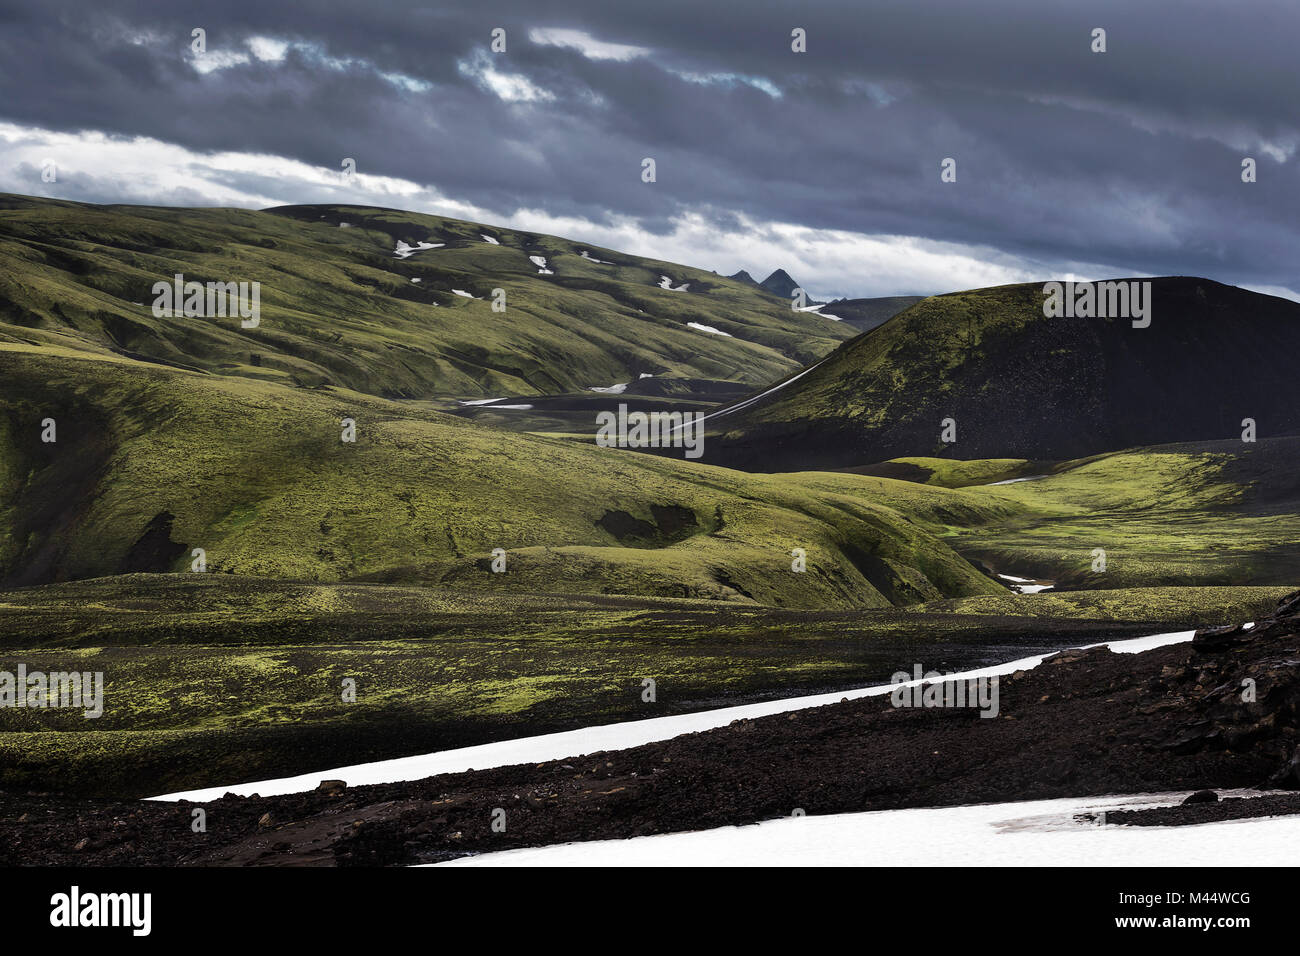 Hautes terres d'Islande, Islande Landmannalaugar, Banque D'Images